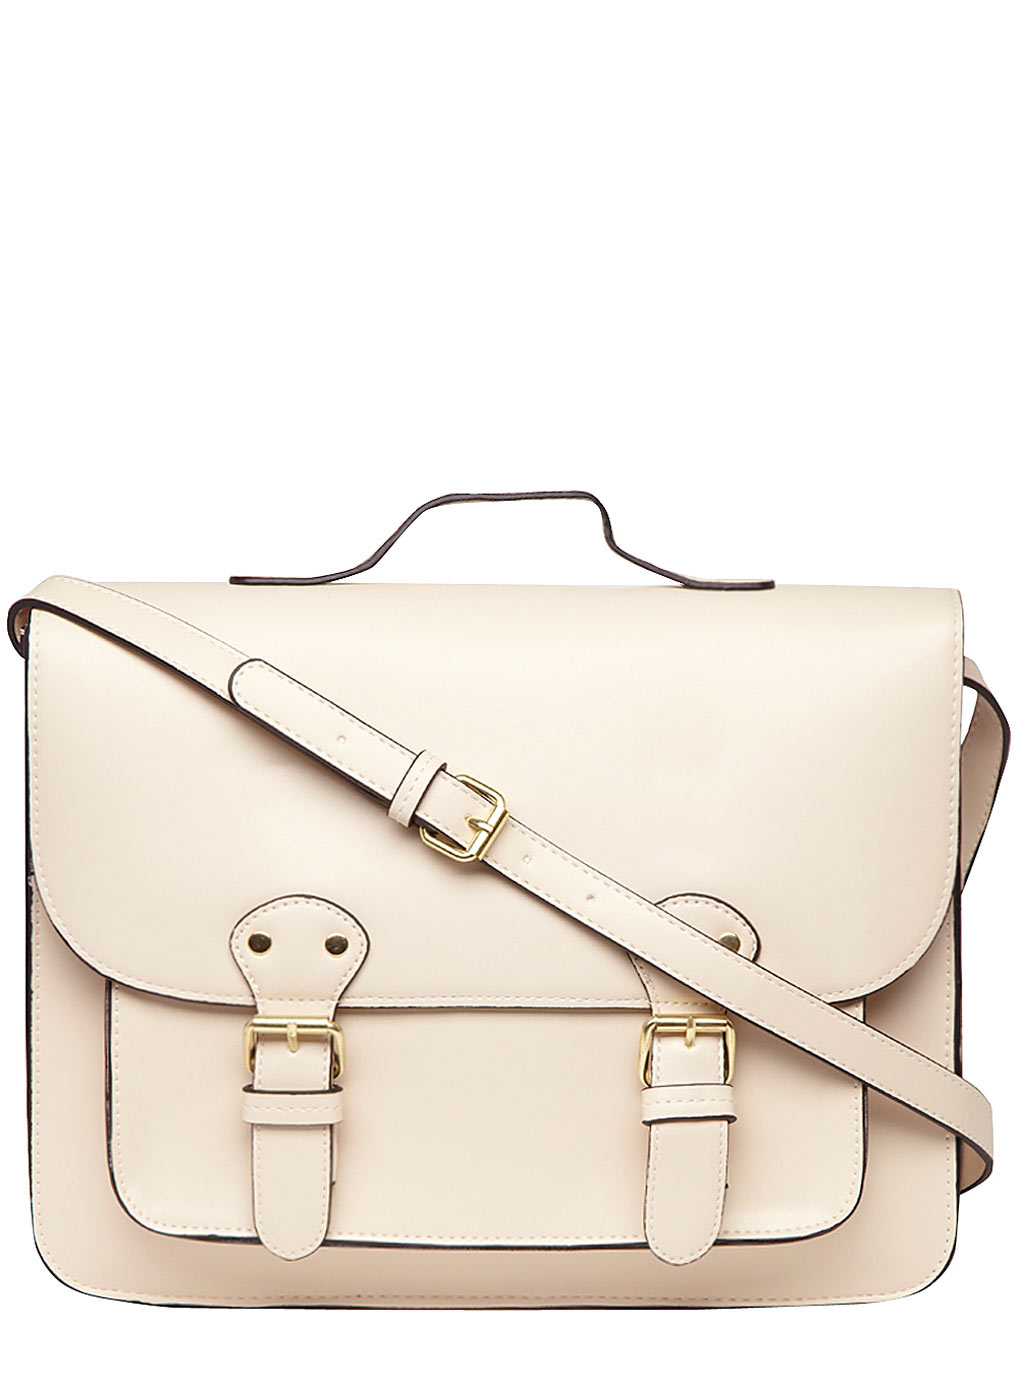 Cream structured satchel 18336955